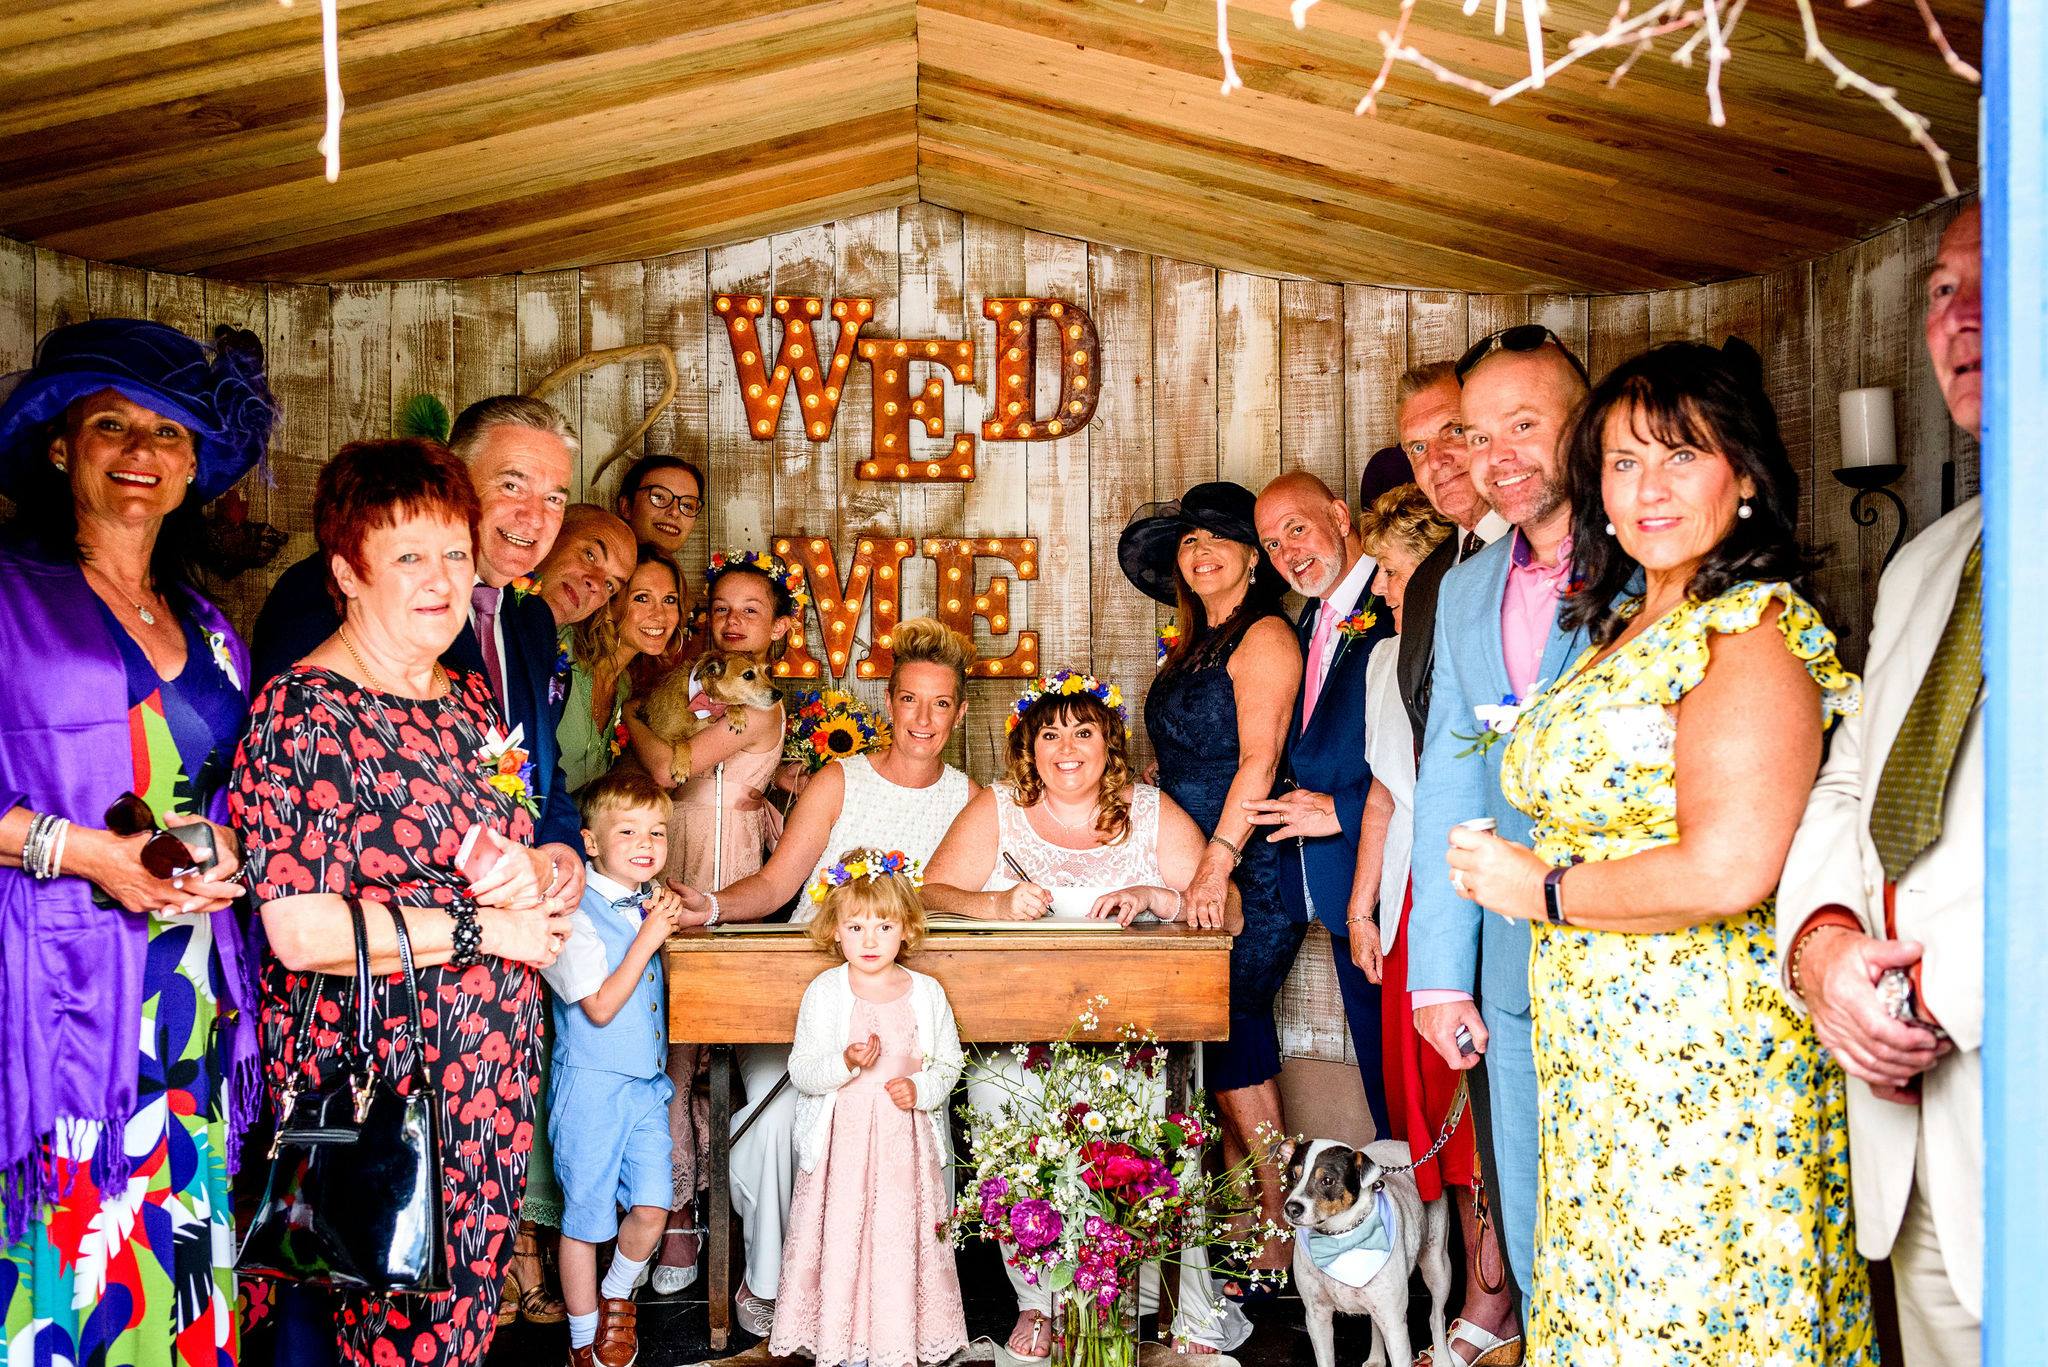 Lower Barns Elopement Weddings - Elopement Weddings Cornwall